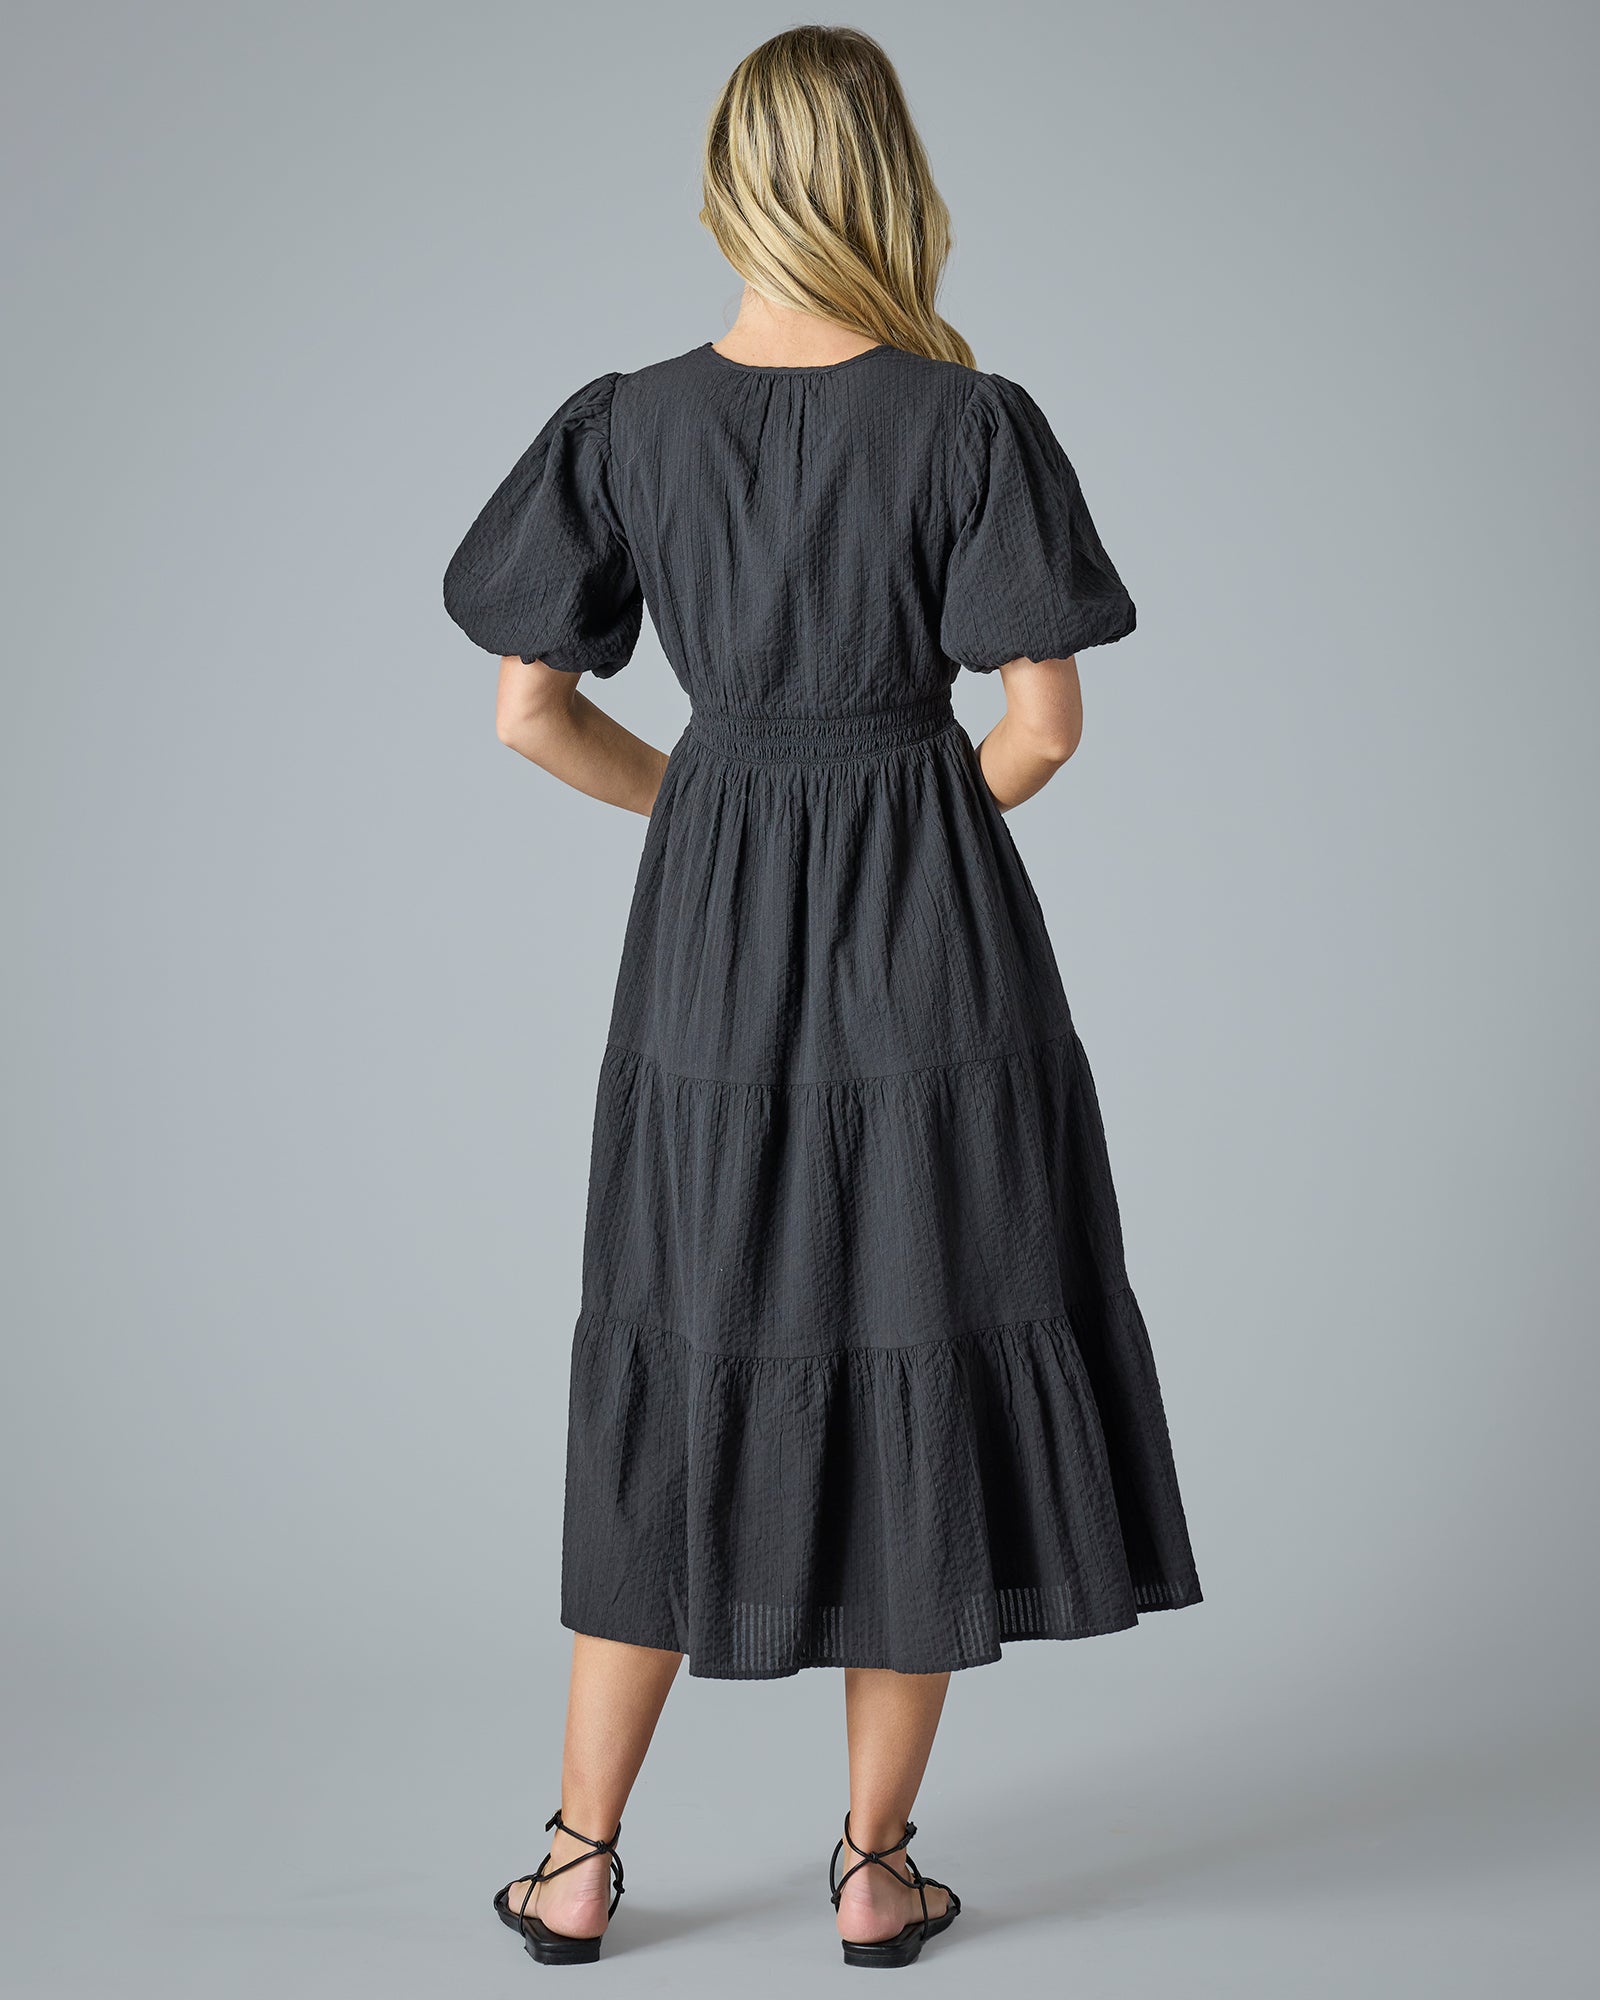 Woman in a black short sleeve midi-length dress